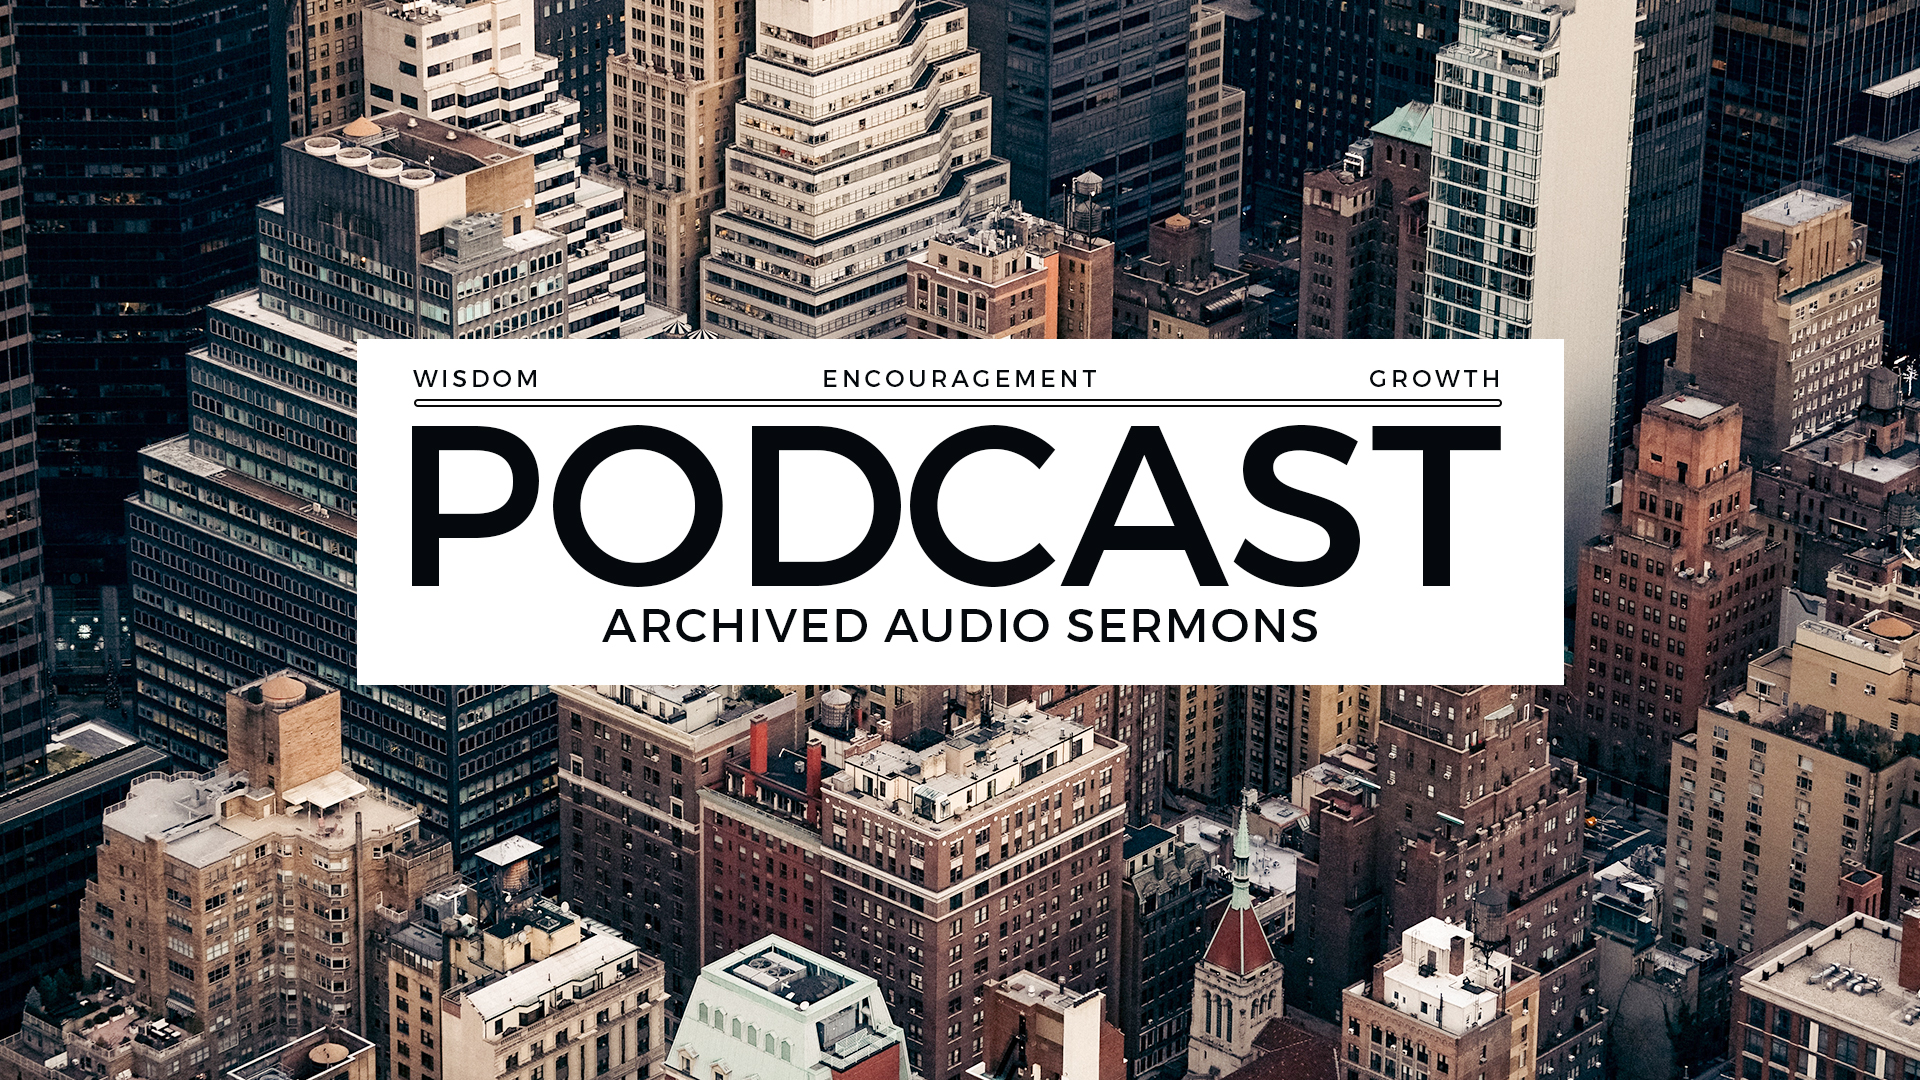 Audio Sermon MP3s